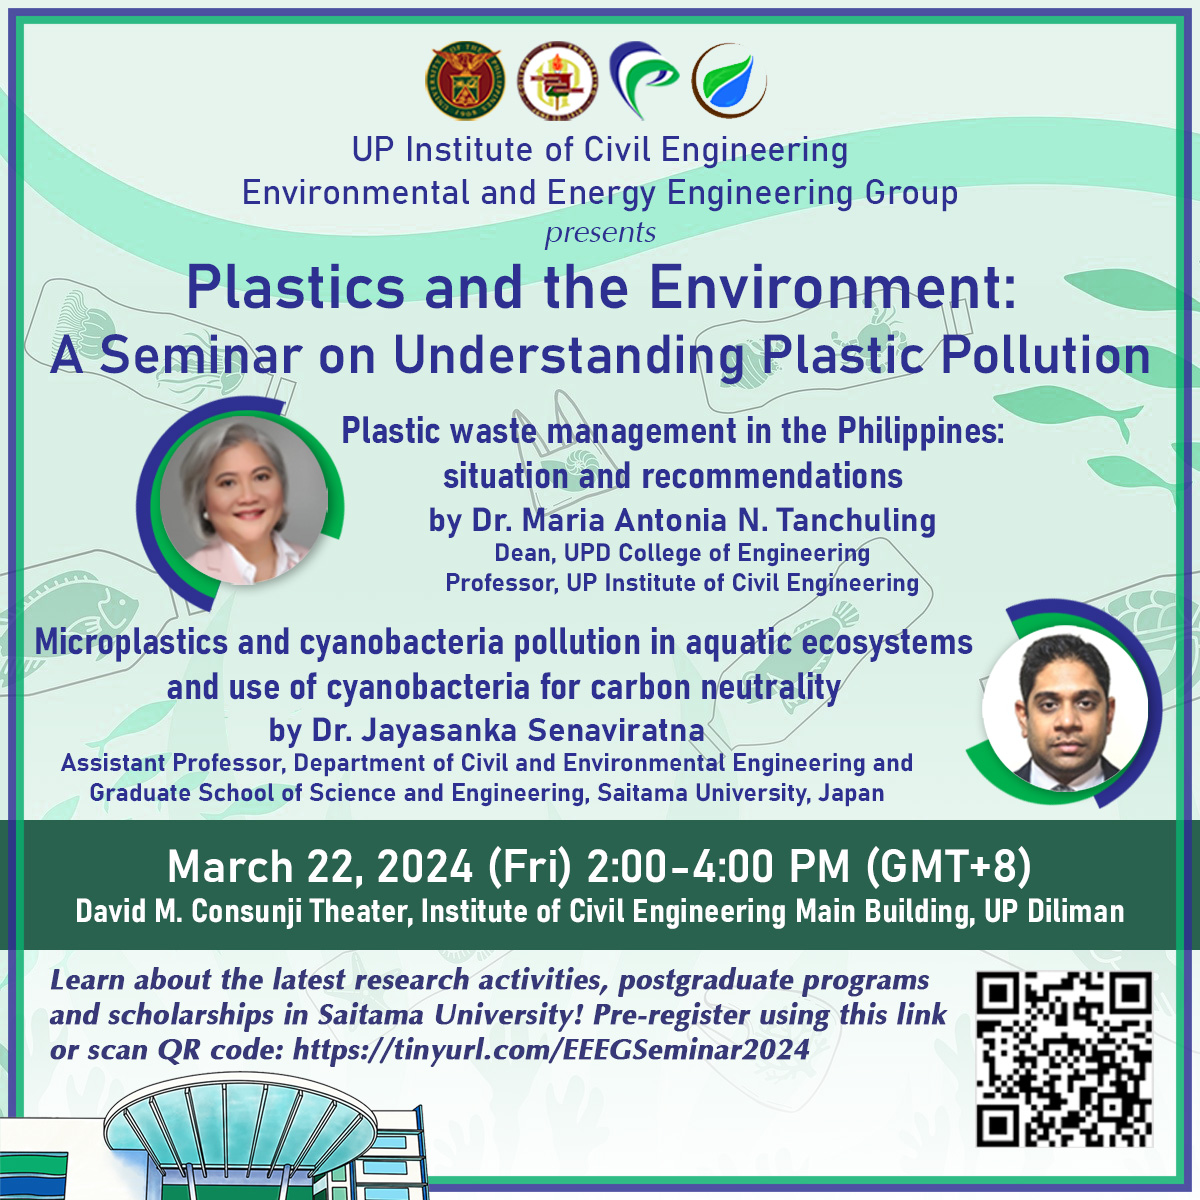 EEEG Seminar on Understanding Plastic Pollution